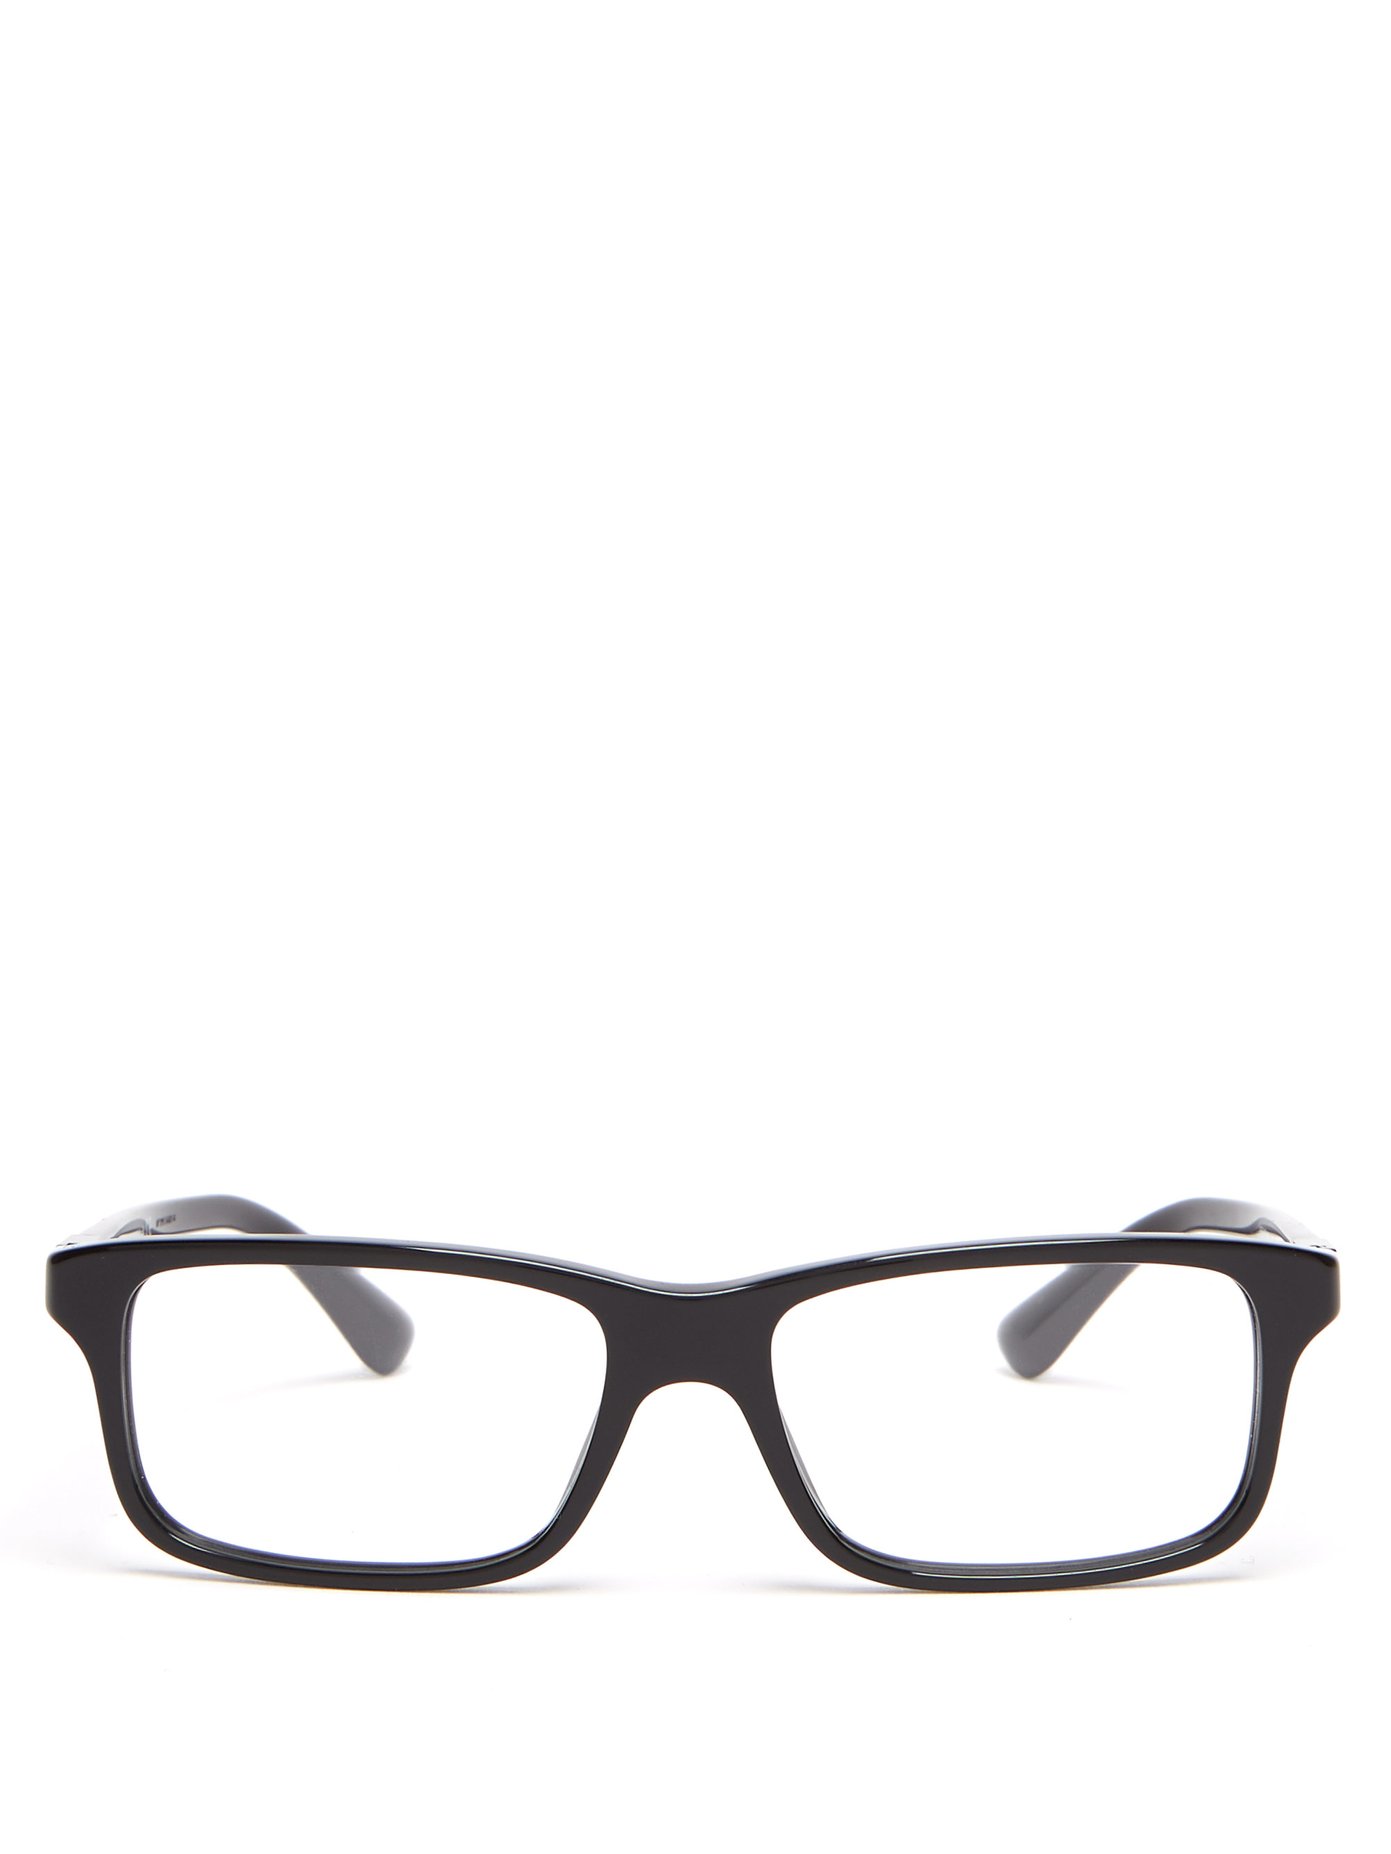 prada square glasses